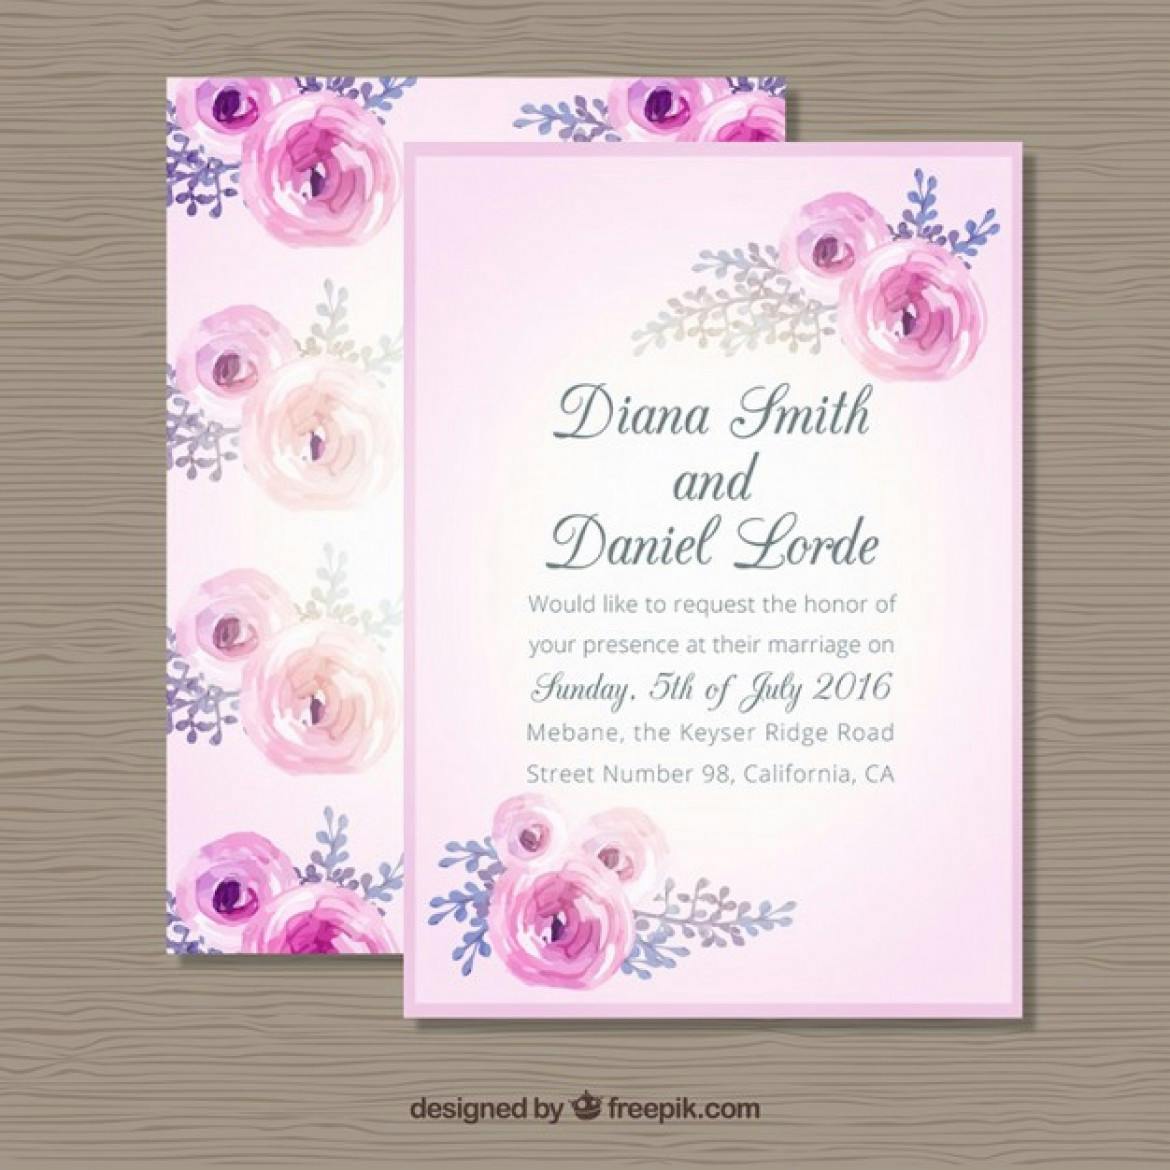 wpid-pink-wedding-invitation-card_23-2147516404-1170x1170